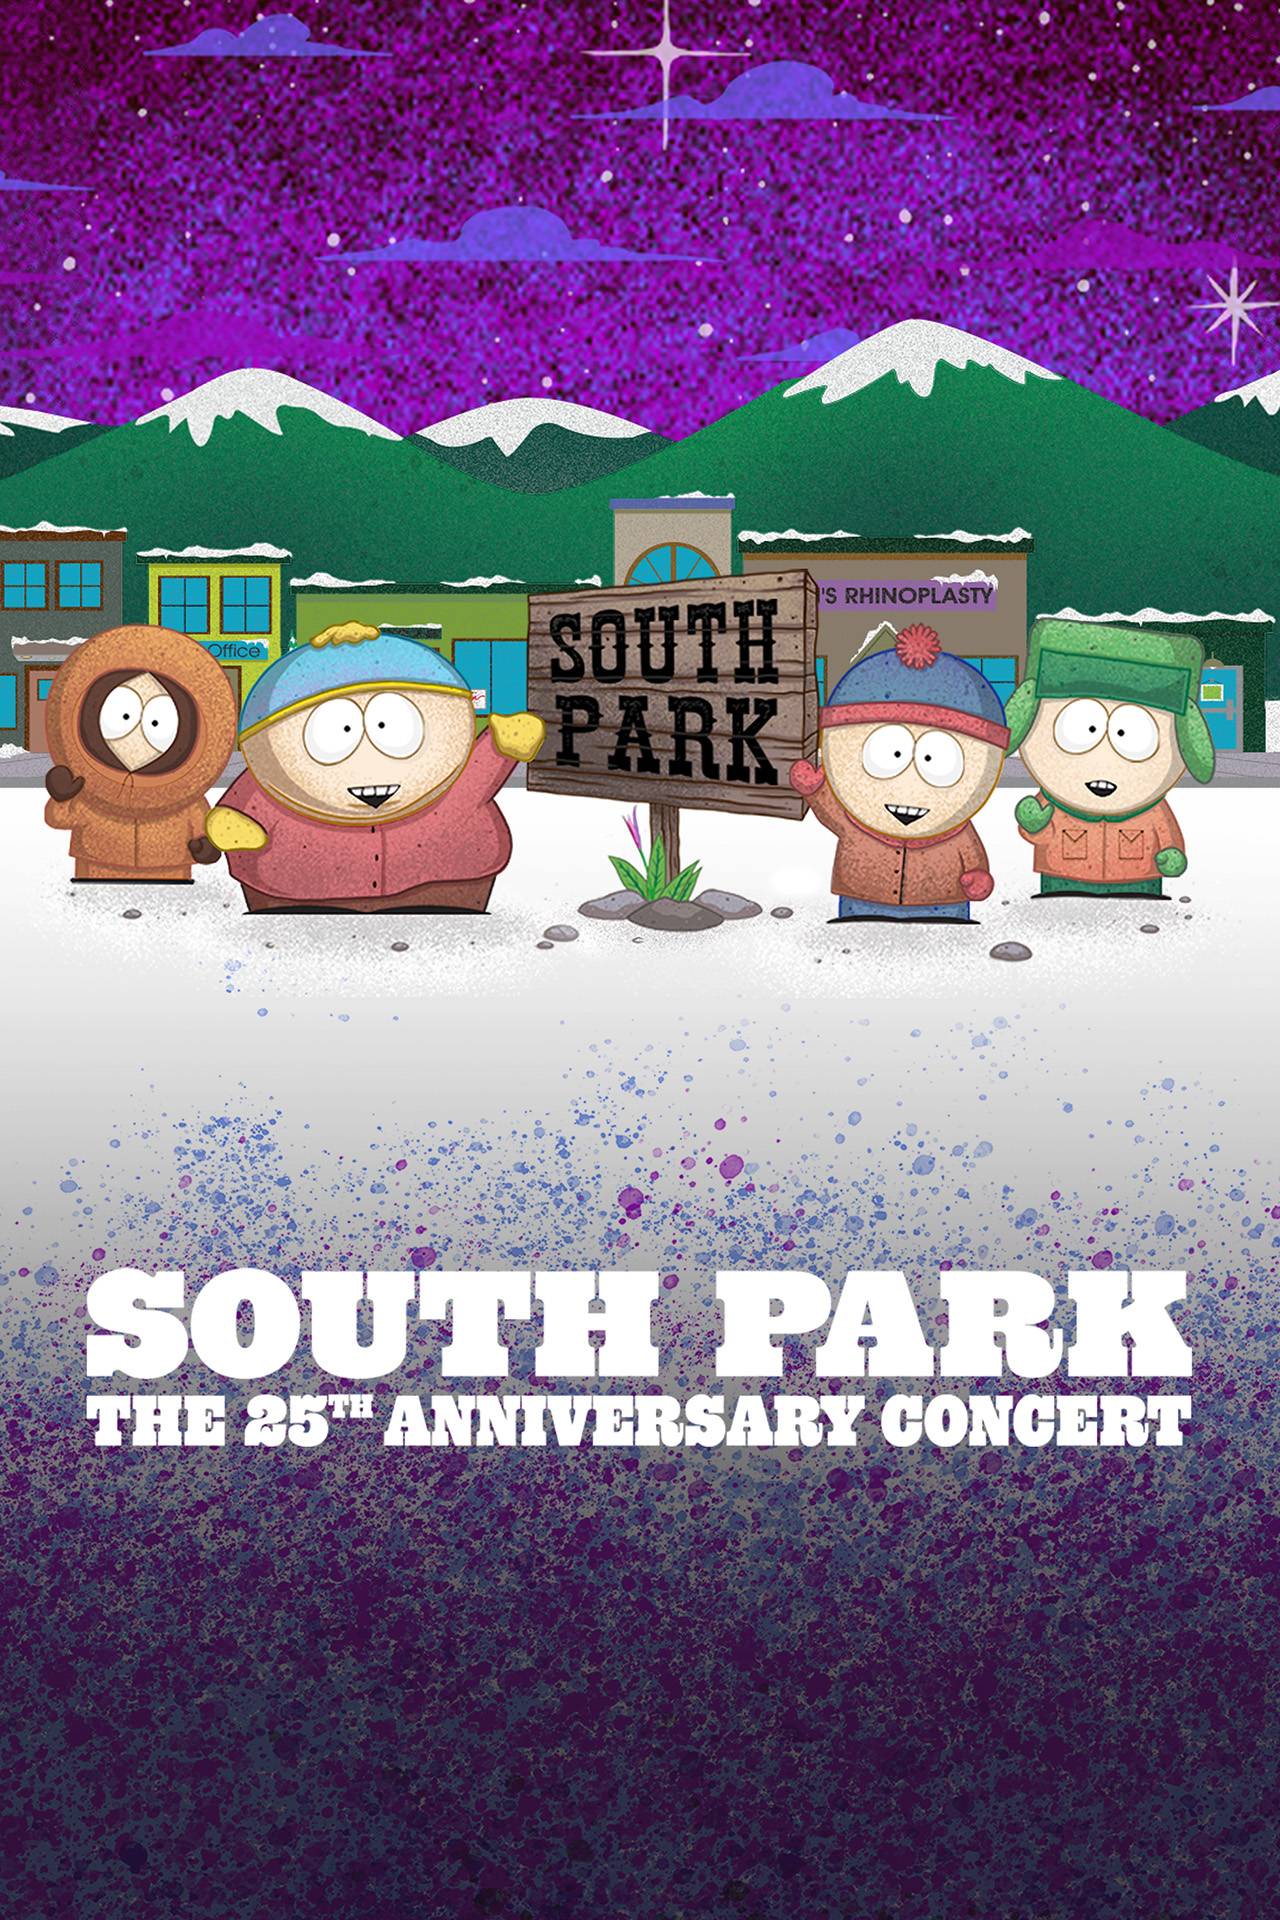 Season Nineteen, South Park Archives